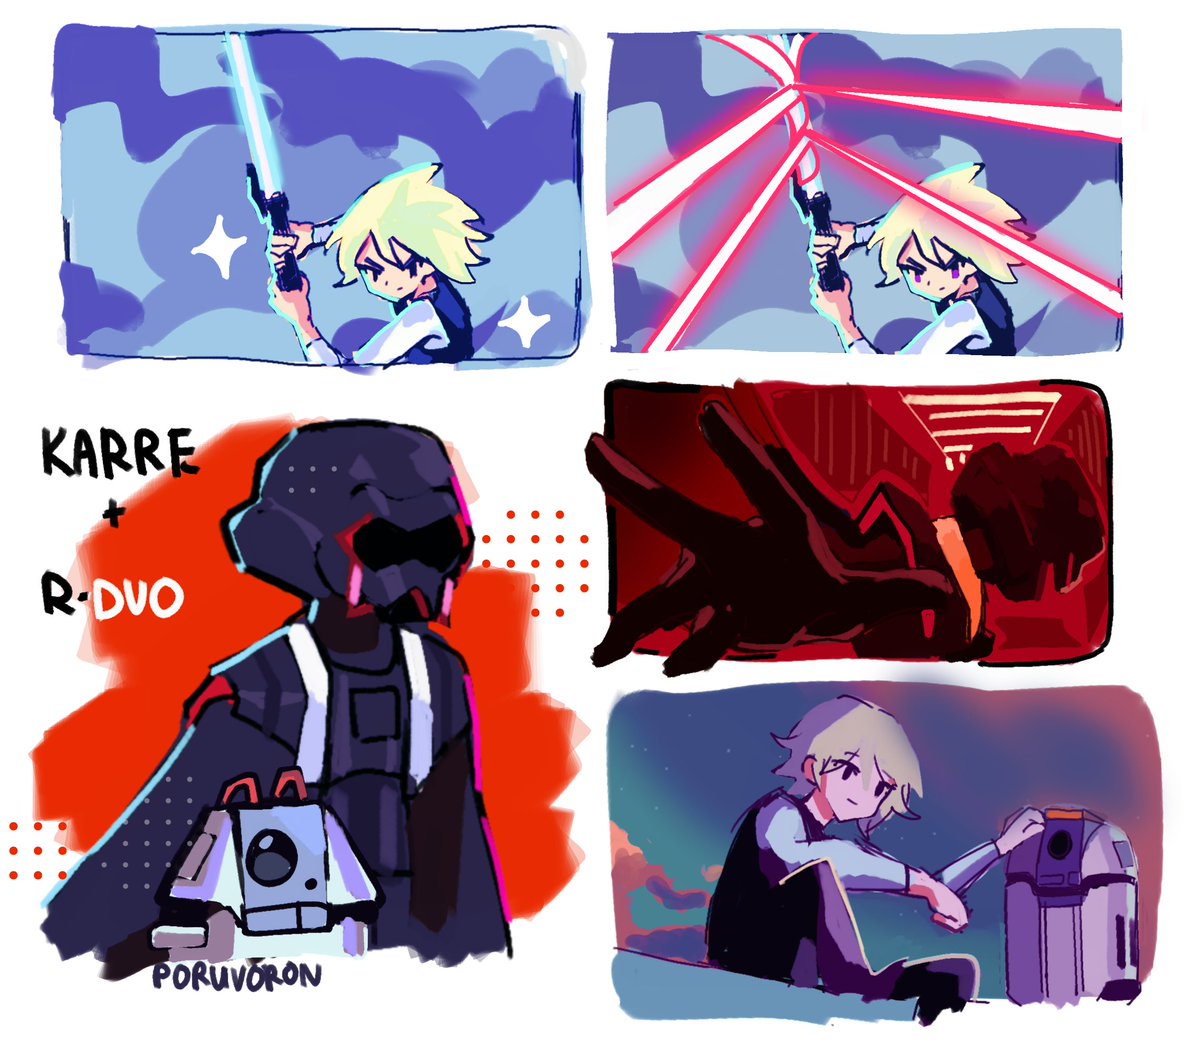 lightsaber energy sword weapon blonde hair parody gun vest  illustration images